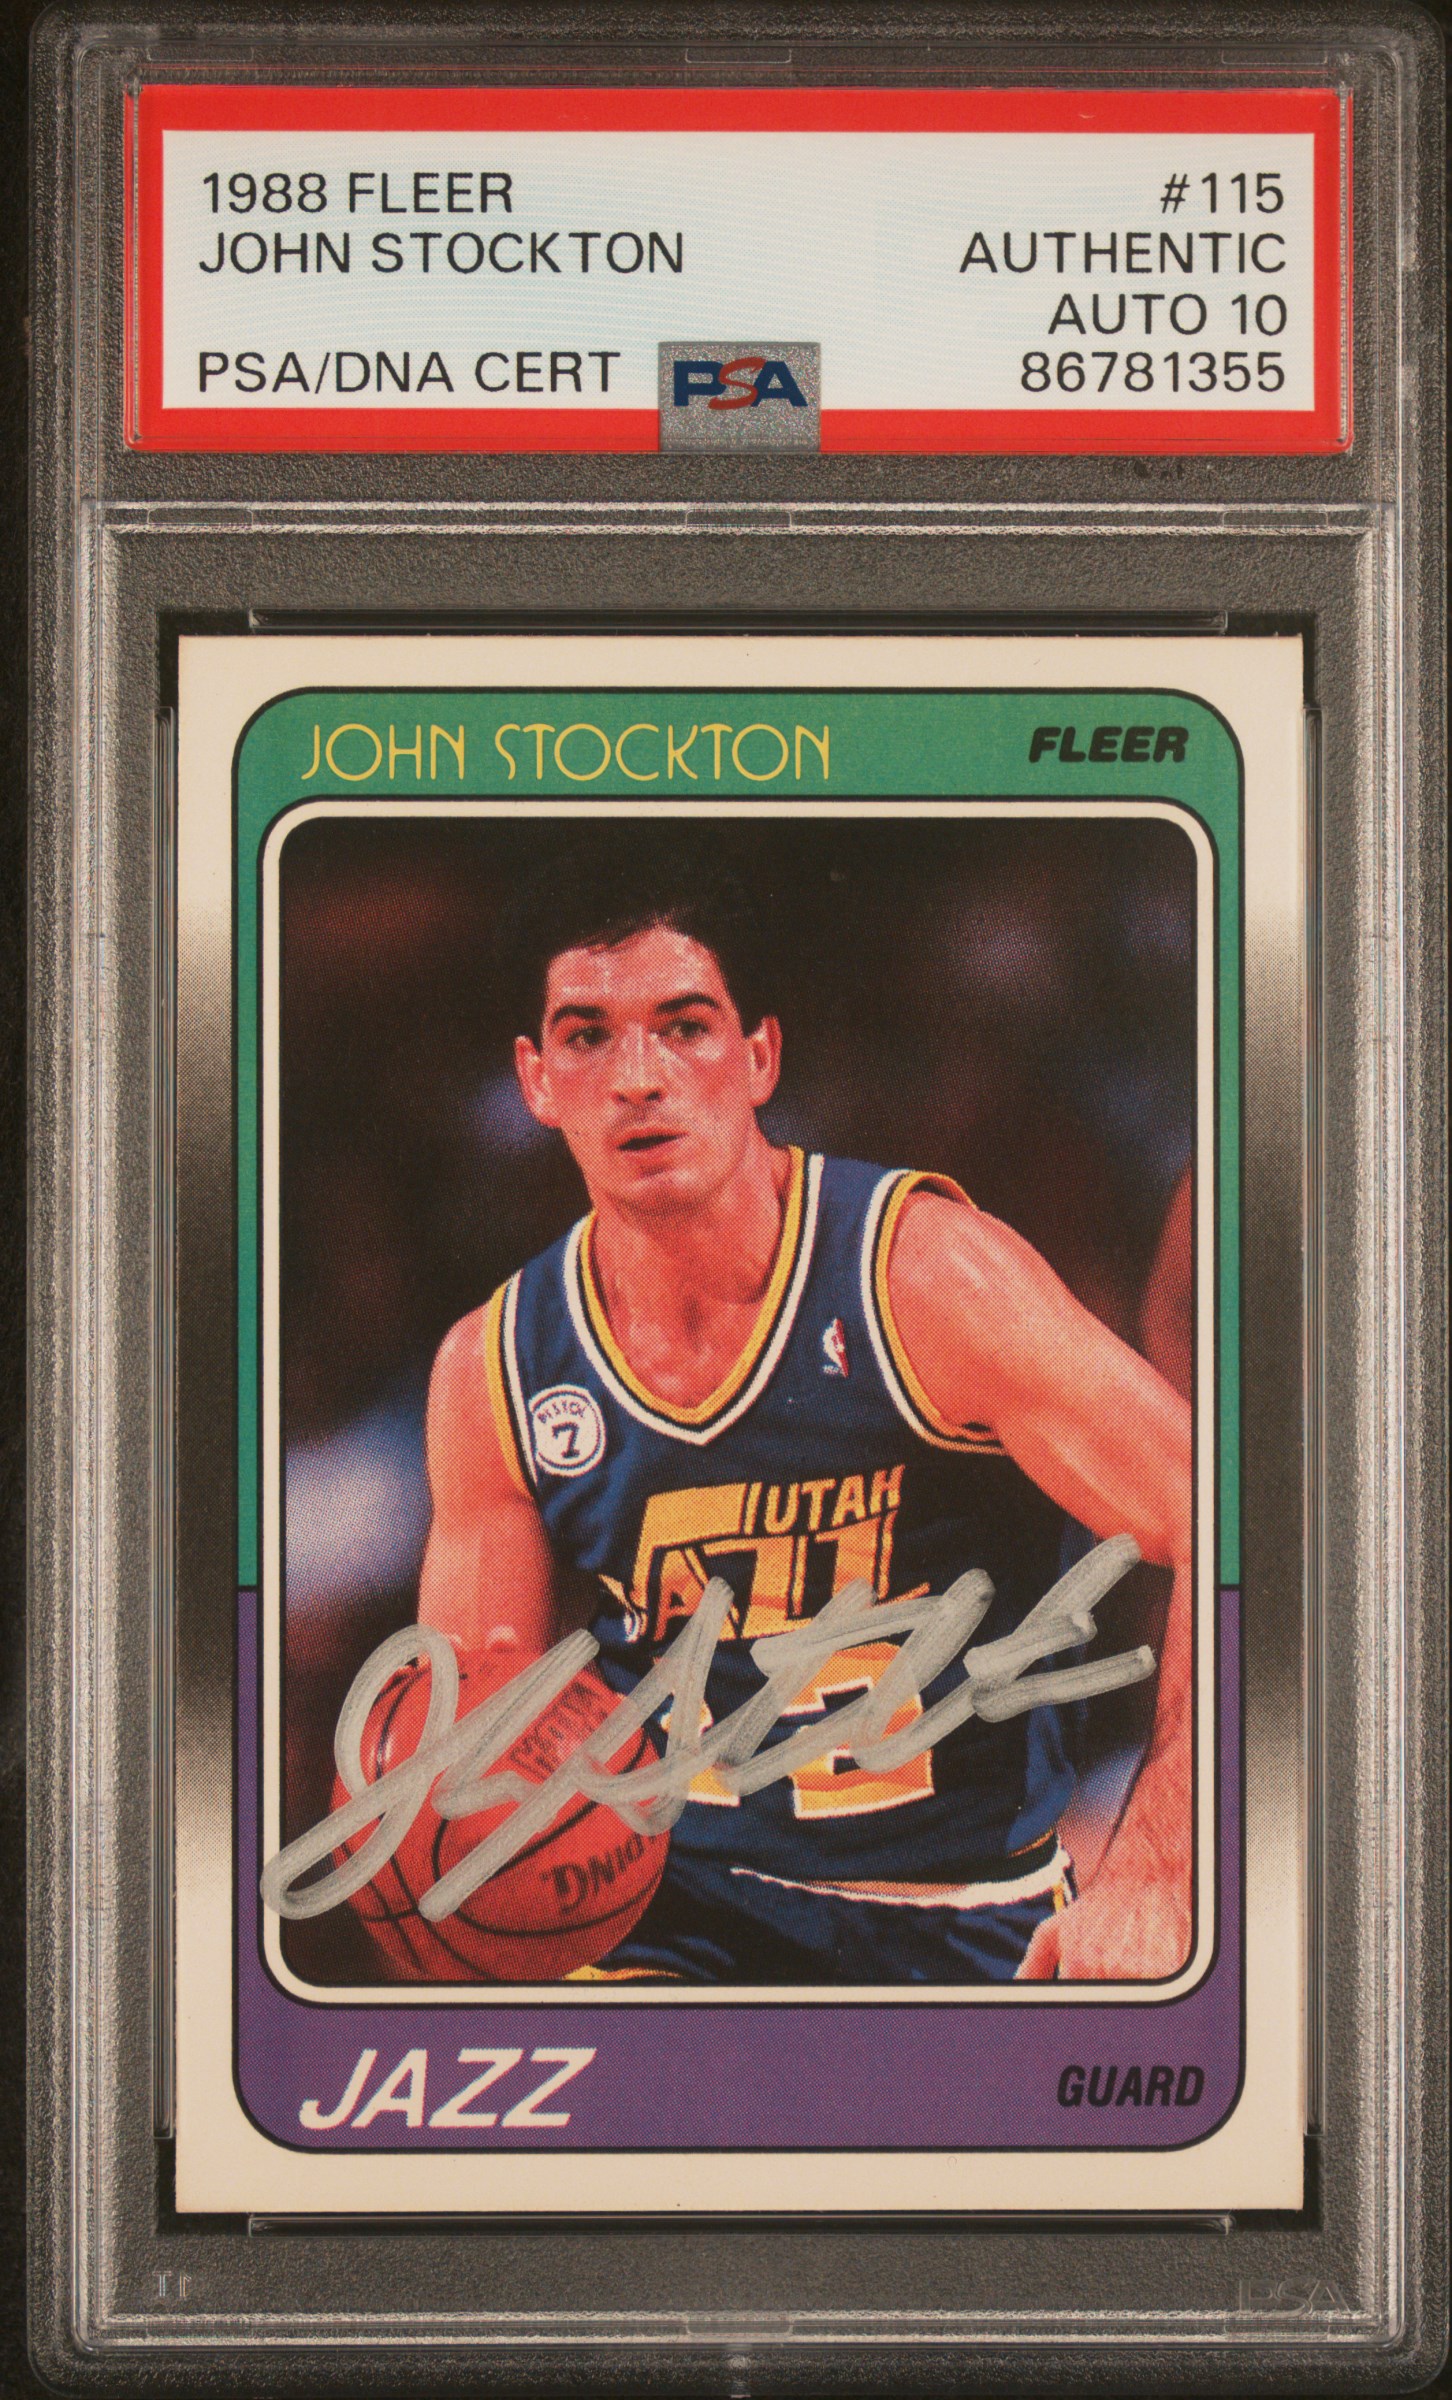 John Stockton 1988 Fleer Signed Basketball Rookie Card #115 Auto PSA 10 86781355